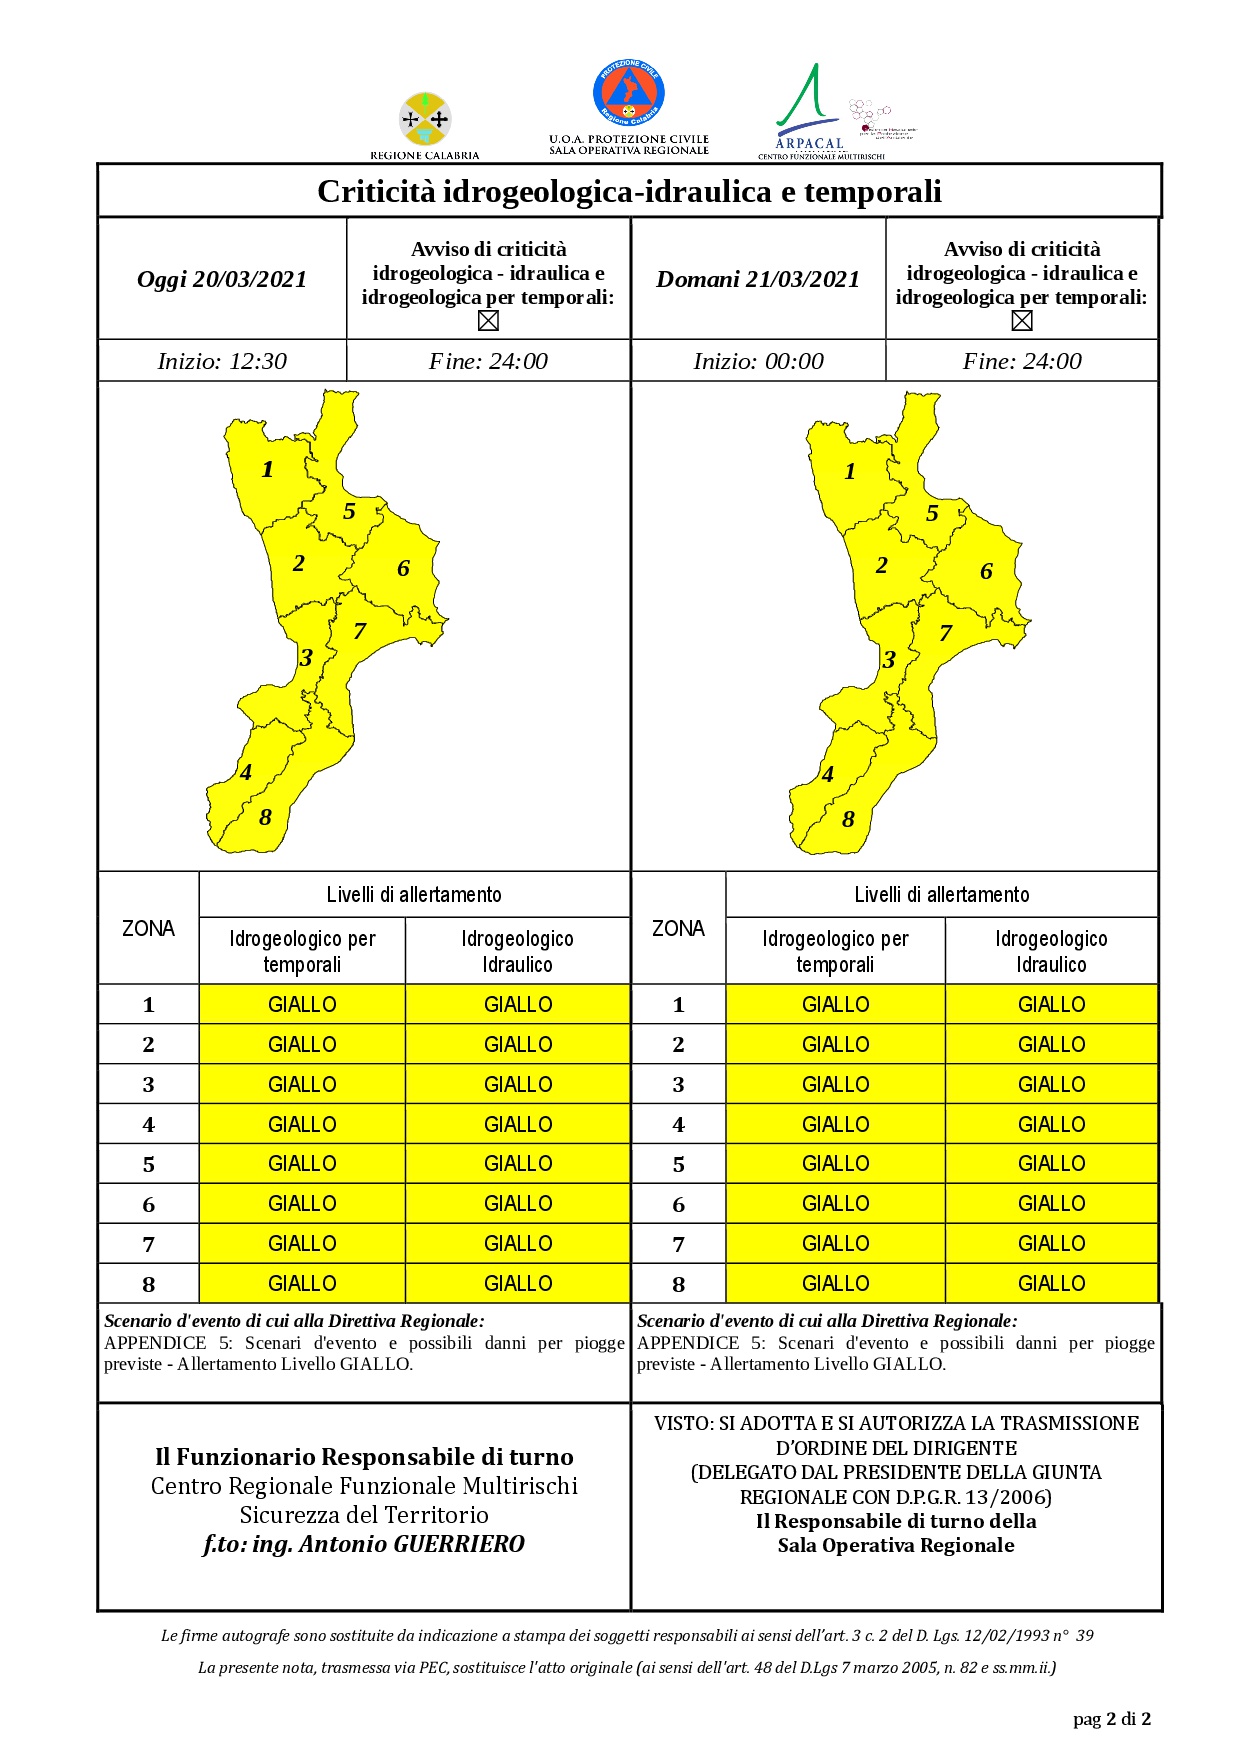 Criticità idrogeologica-idraulica e temporali in Calabria 20-03-2021